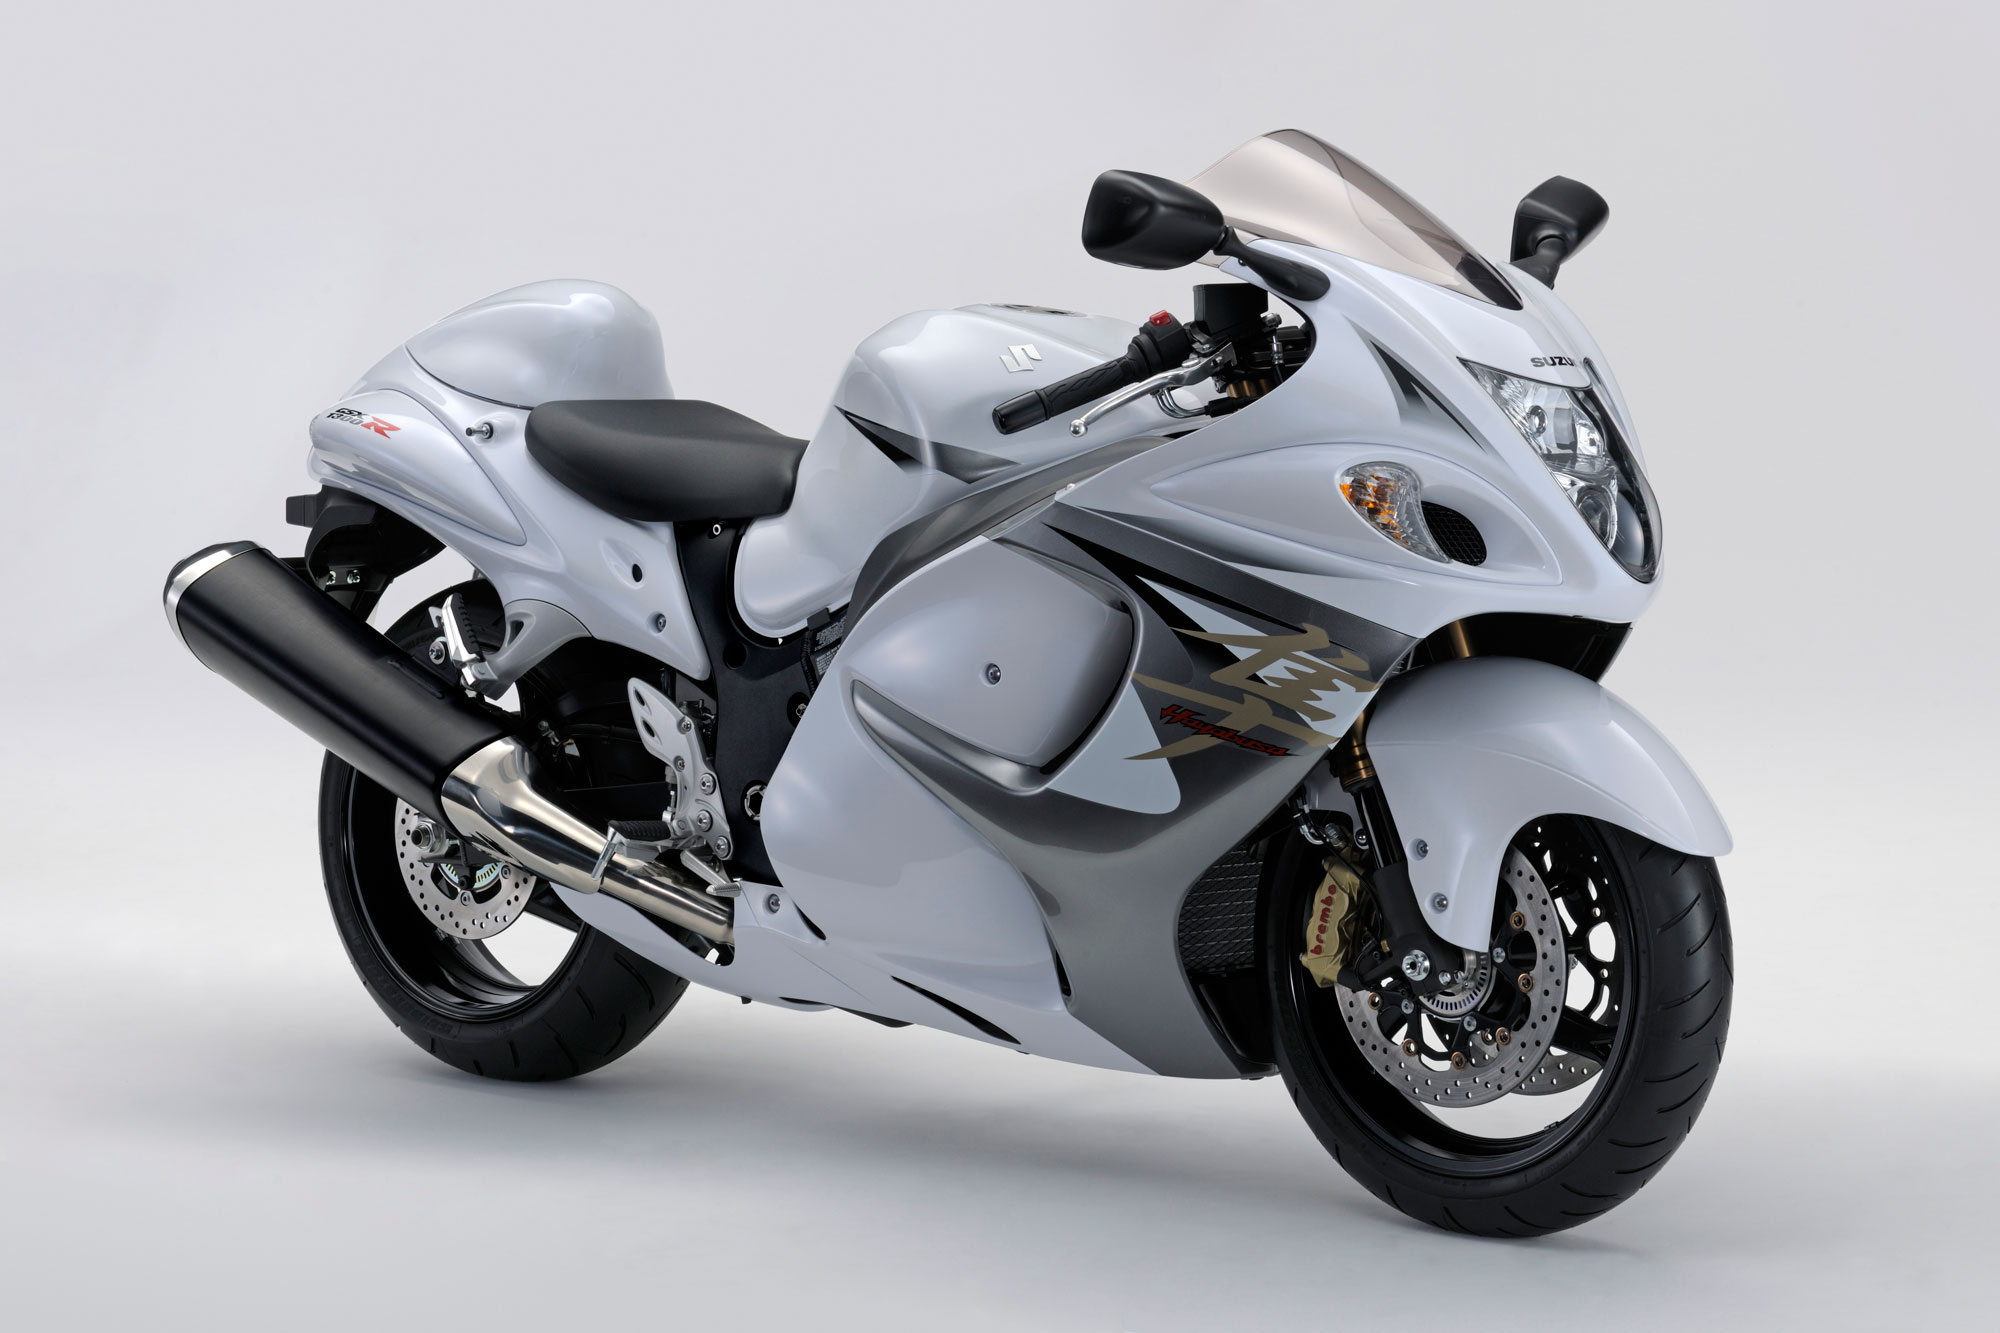 https://www.totalmotorcycle.com/motorcycles/2013models/2013-Suzuki-Hayabusa-GSX1300R-ABS6.jpg